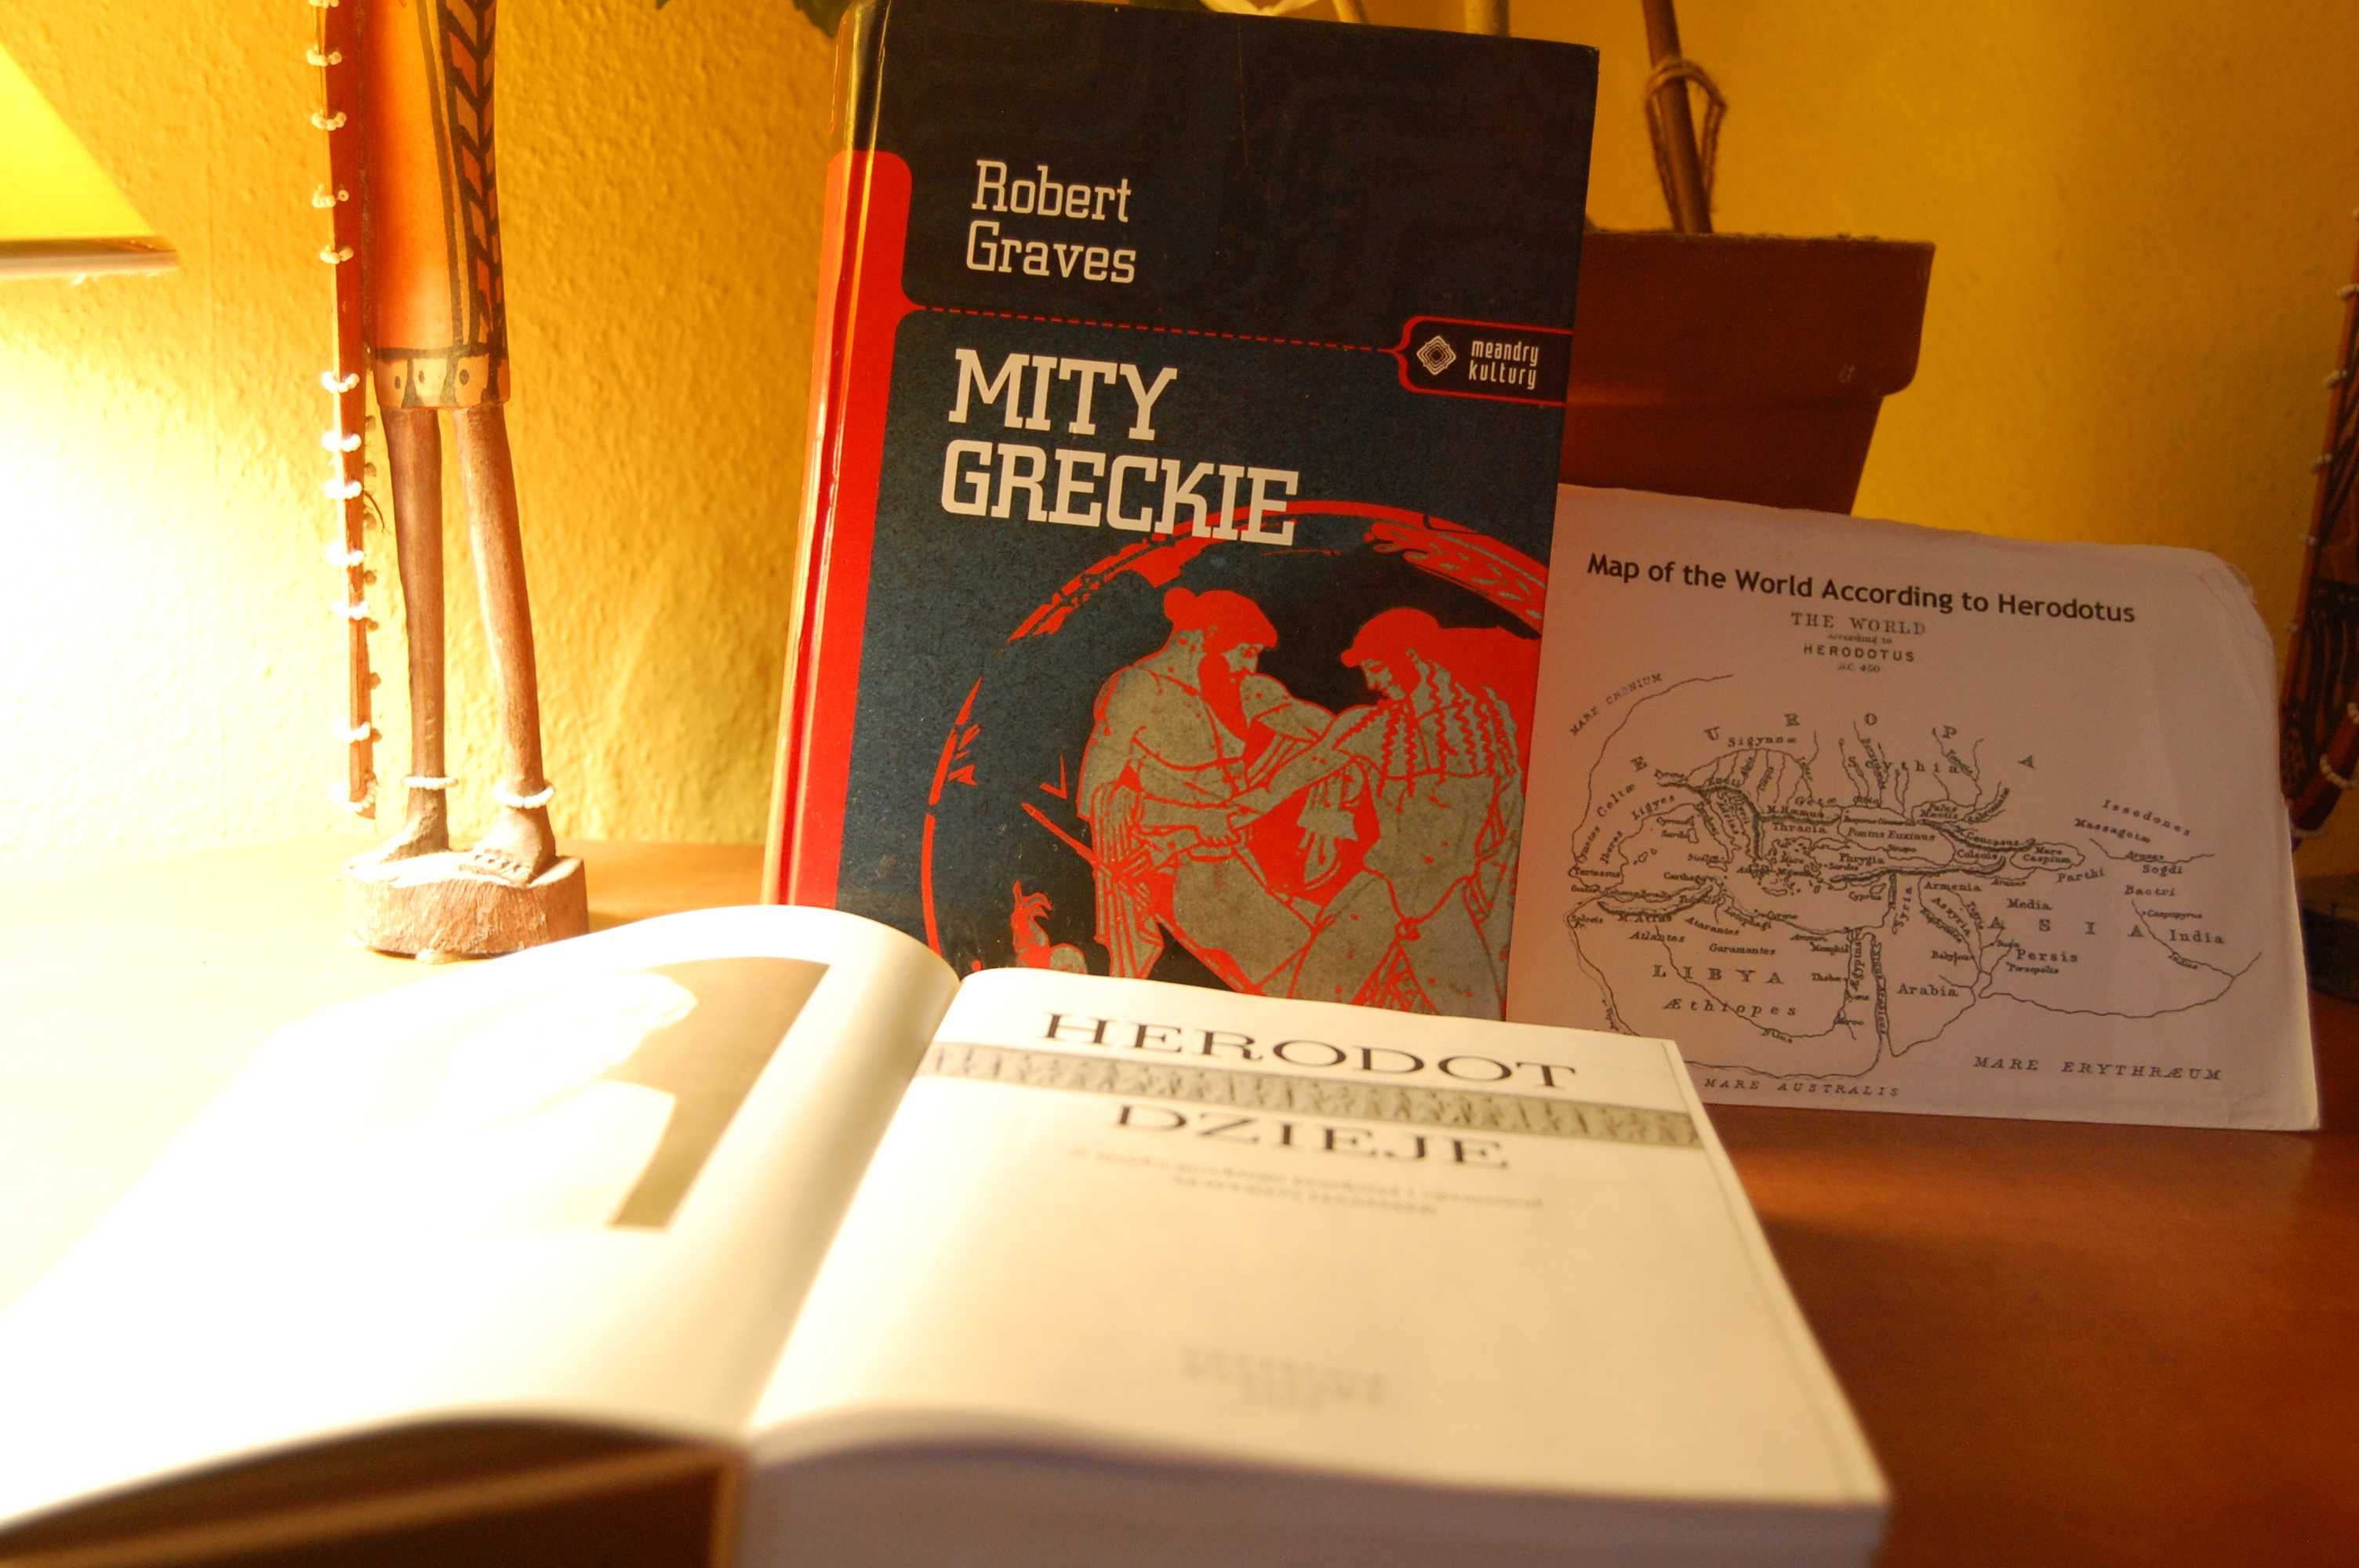 Graves Robert - MITY GRECKIE